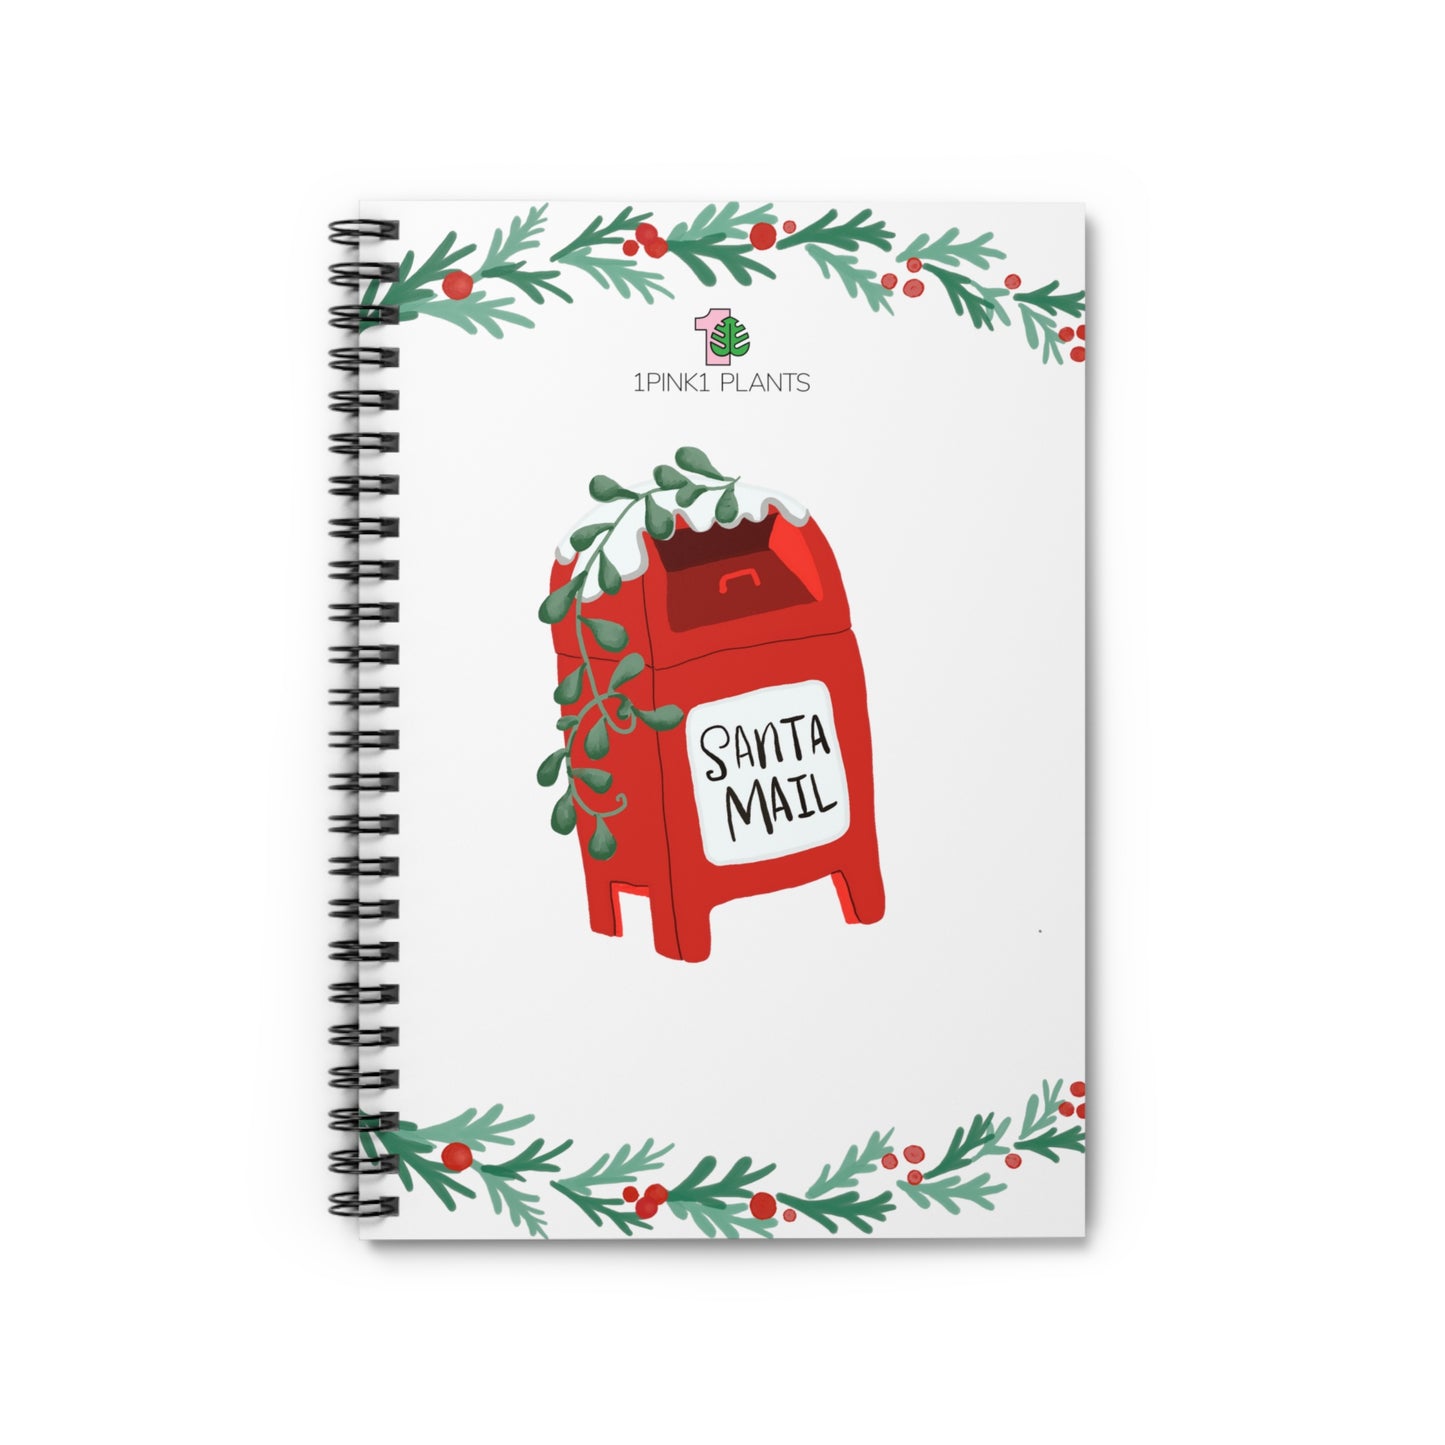 Santa Mail Spiral Notebook - Ruled Line